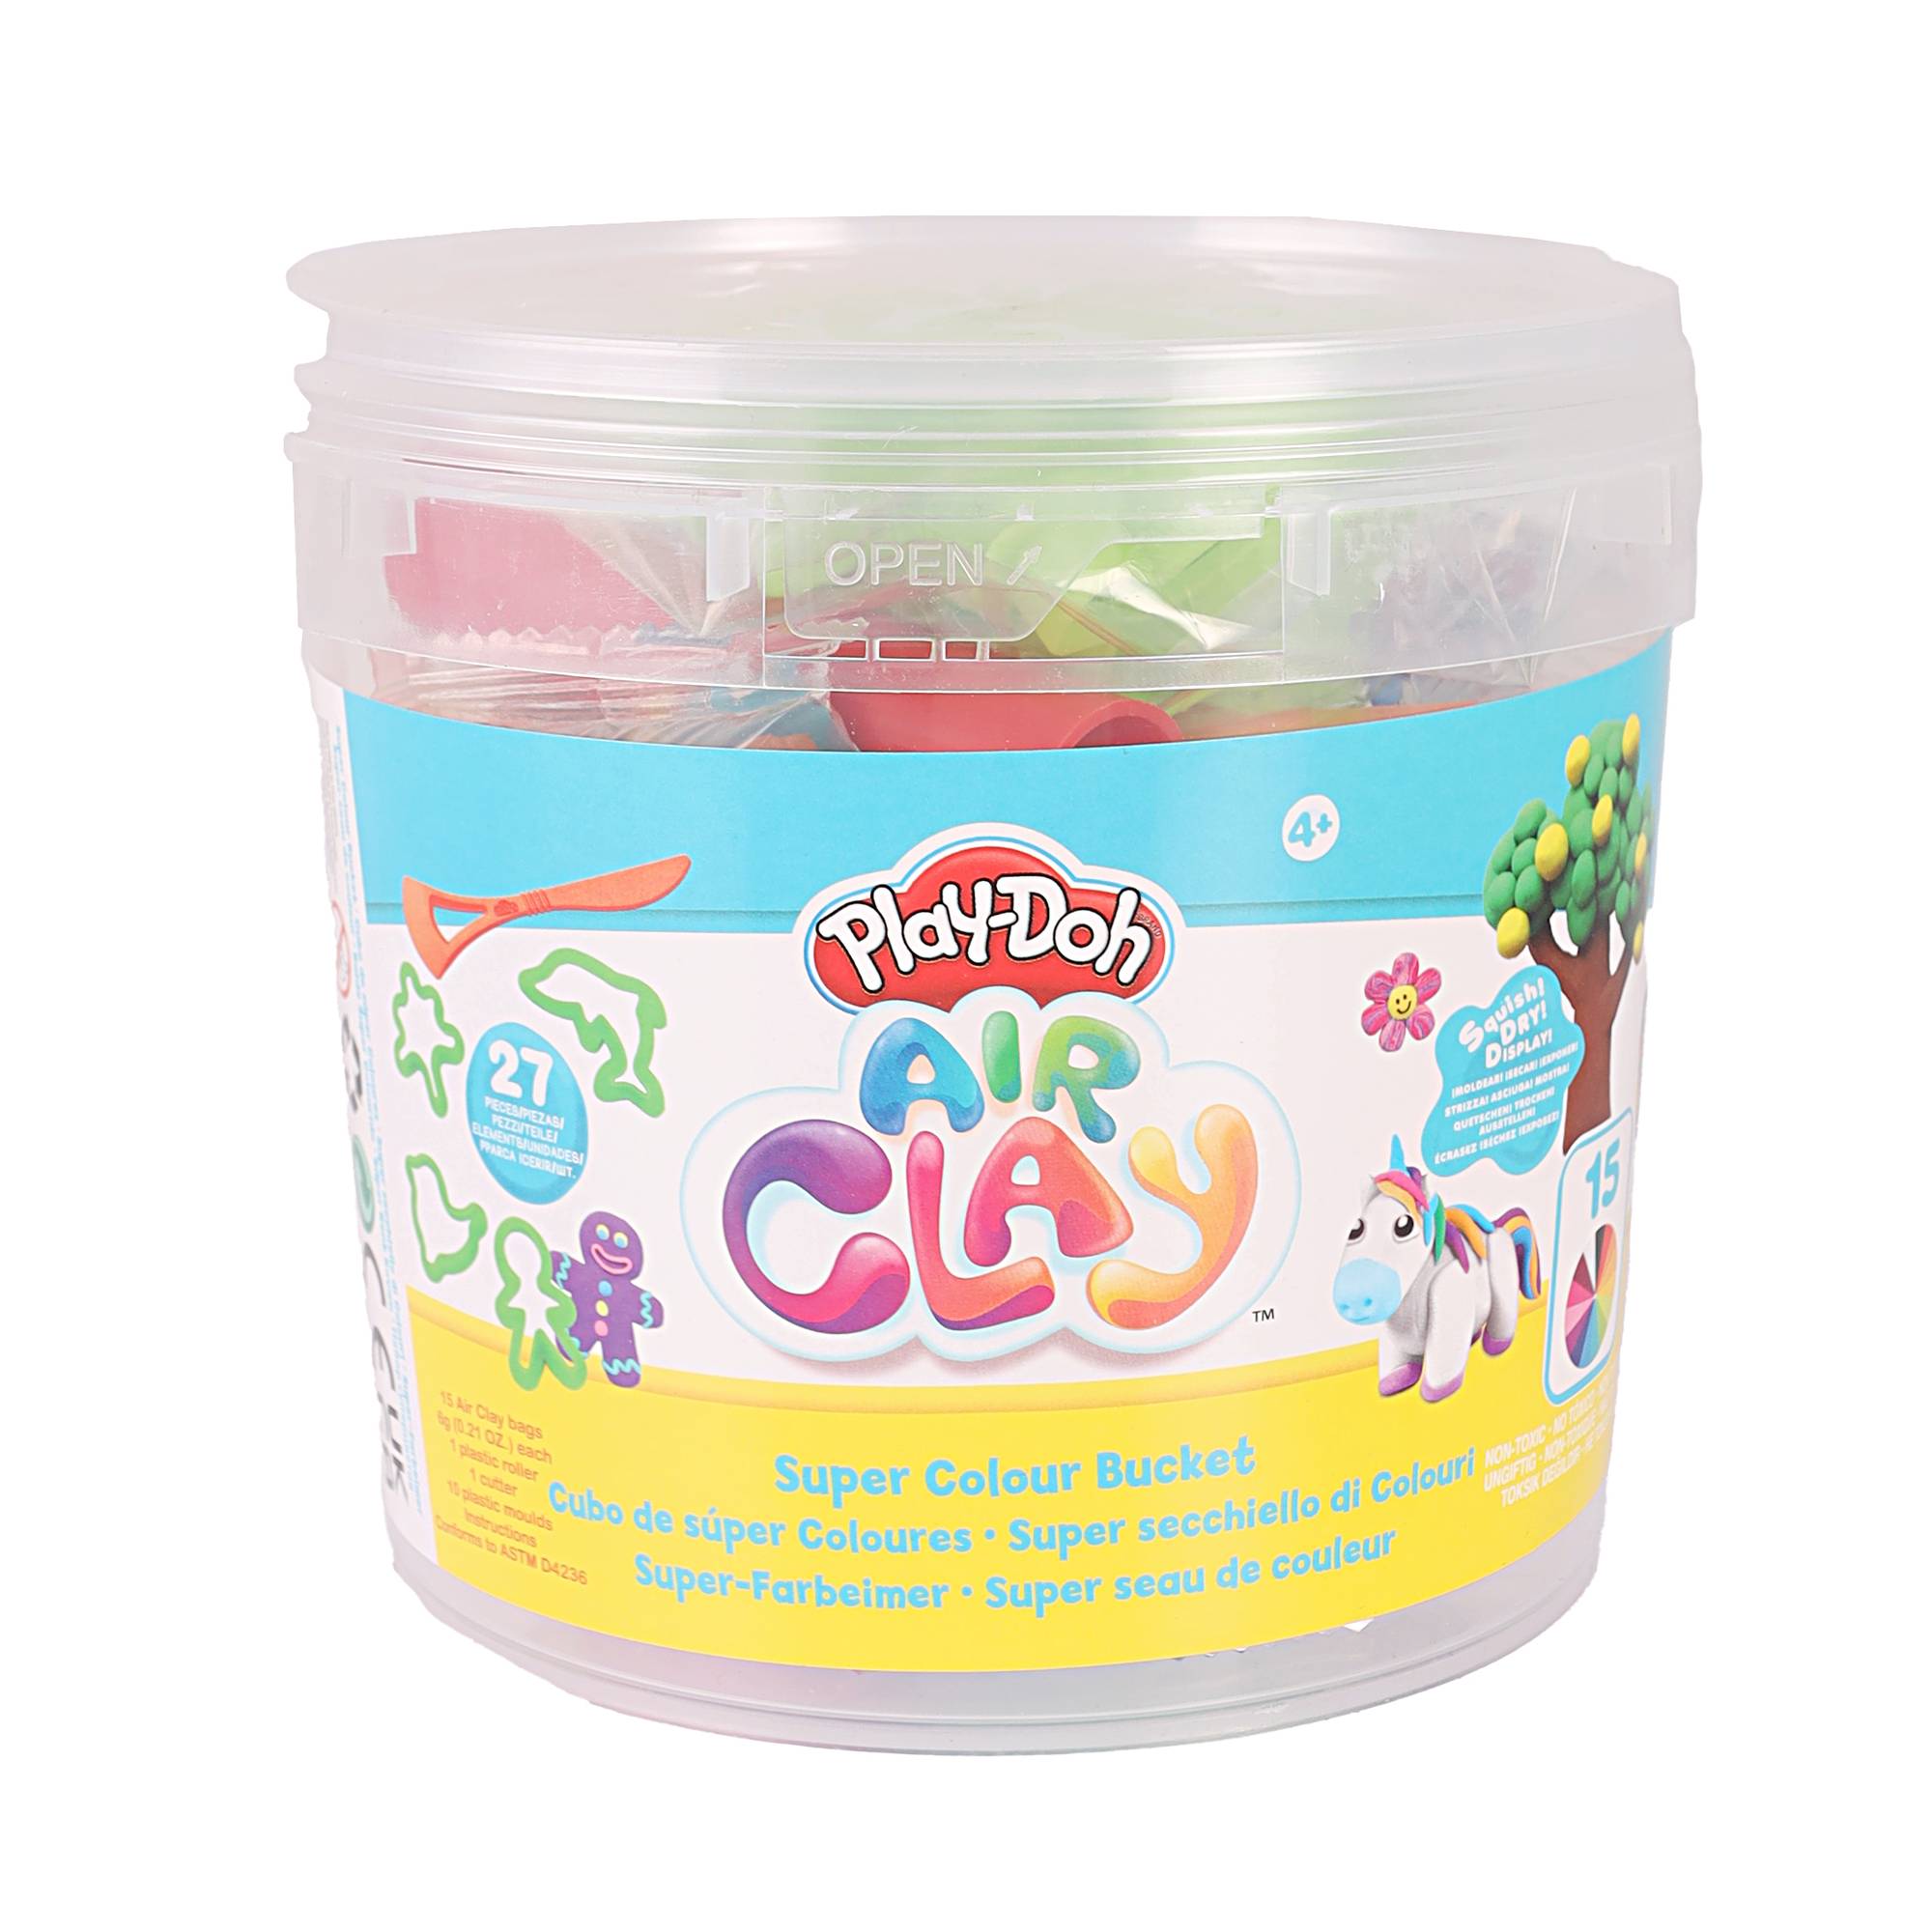 Play Doh Air Clay Bucket